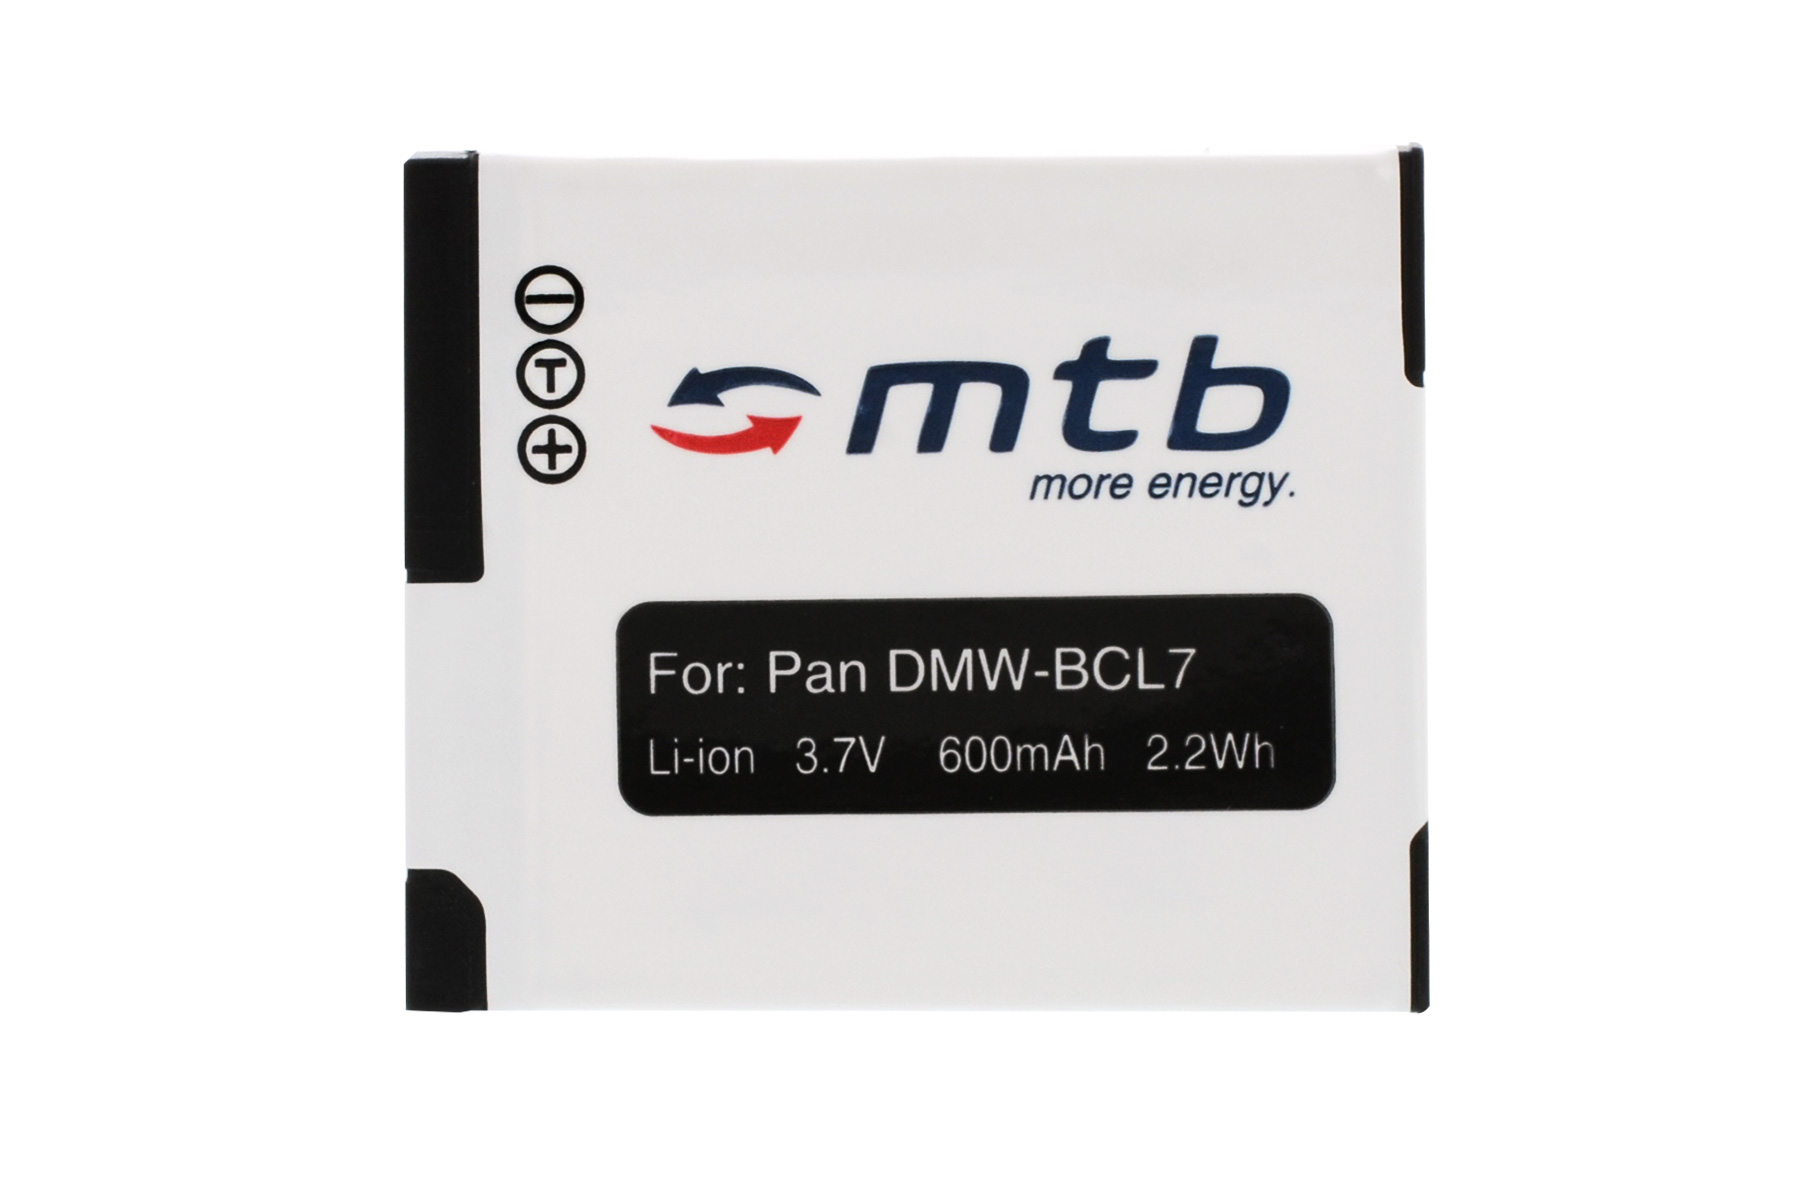 MTB MORE ENERGY BAT-373 DMW-BCL7 mAh Akku, 600 Li-Ion